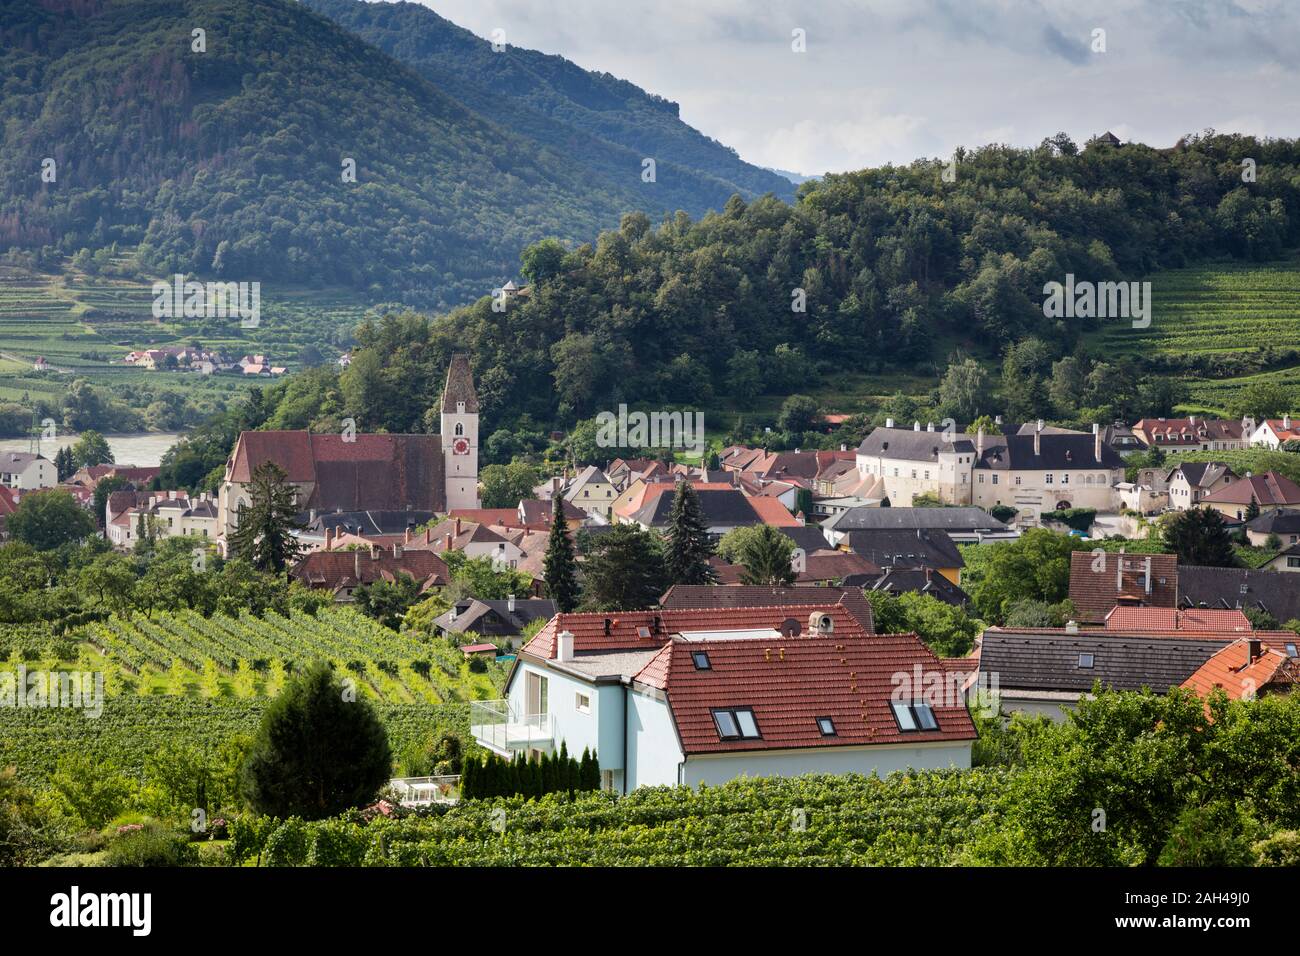 Austria, Lower Austria, Wachau, Spitz an der Donau, View of town and landscape Stock Photo